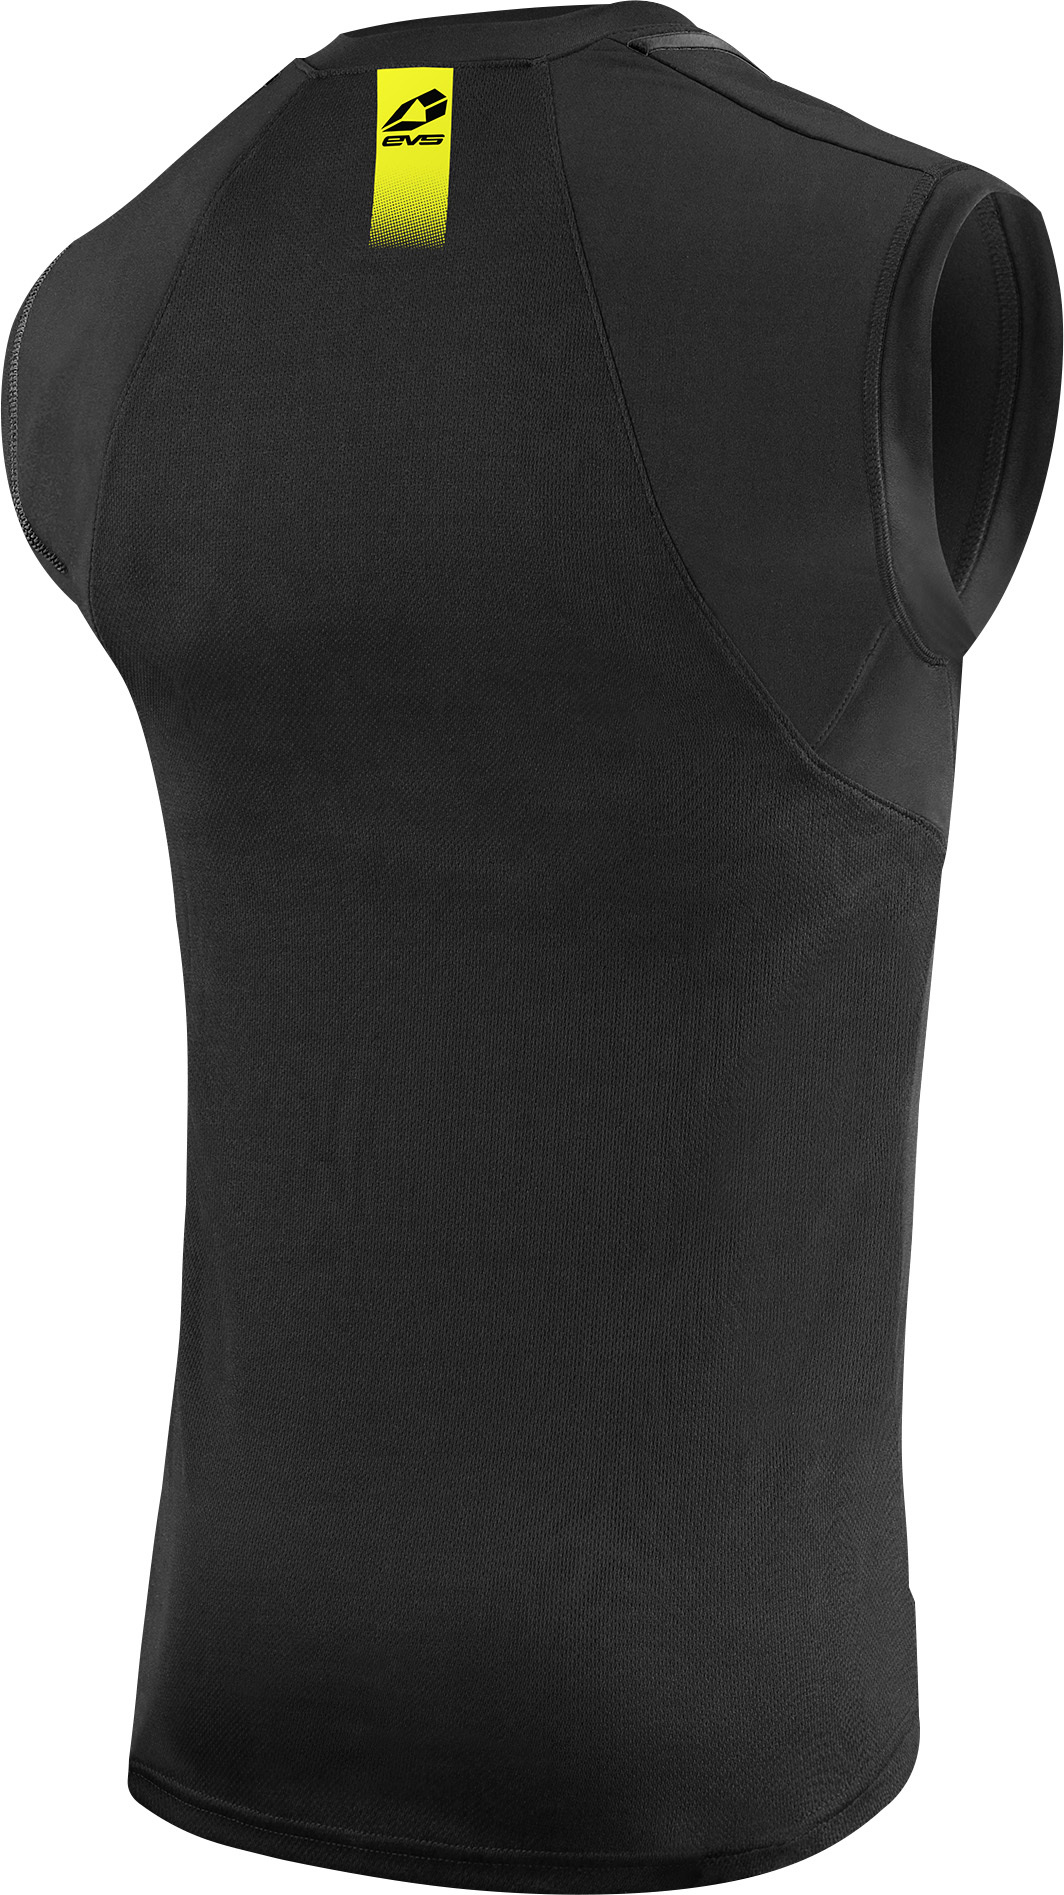 Sleeveless Tug Shirt Black Youth Medium - Click Image to Close